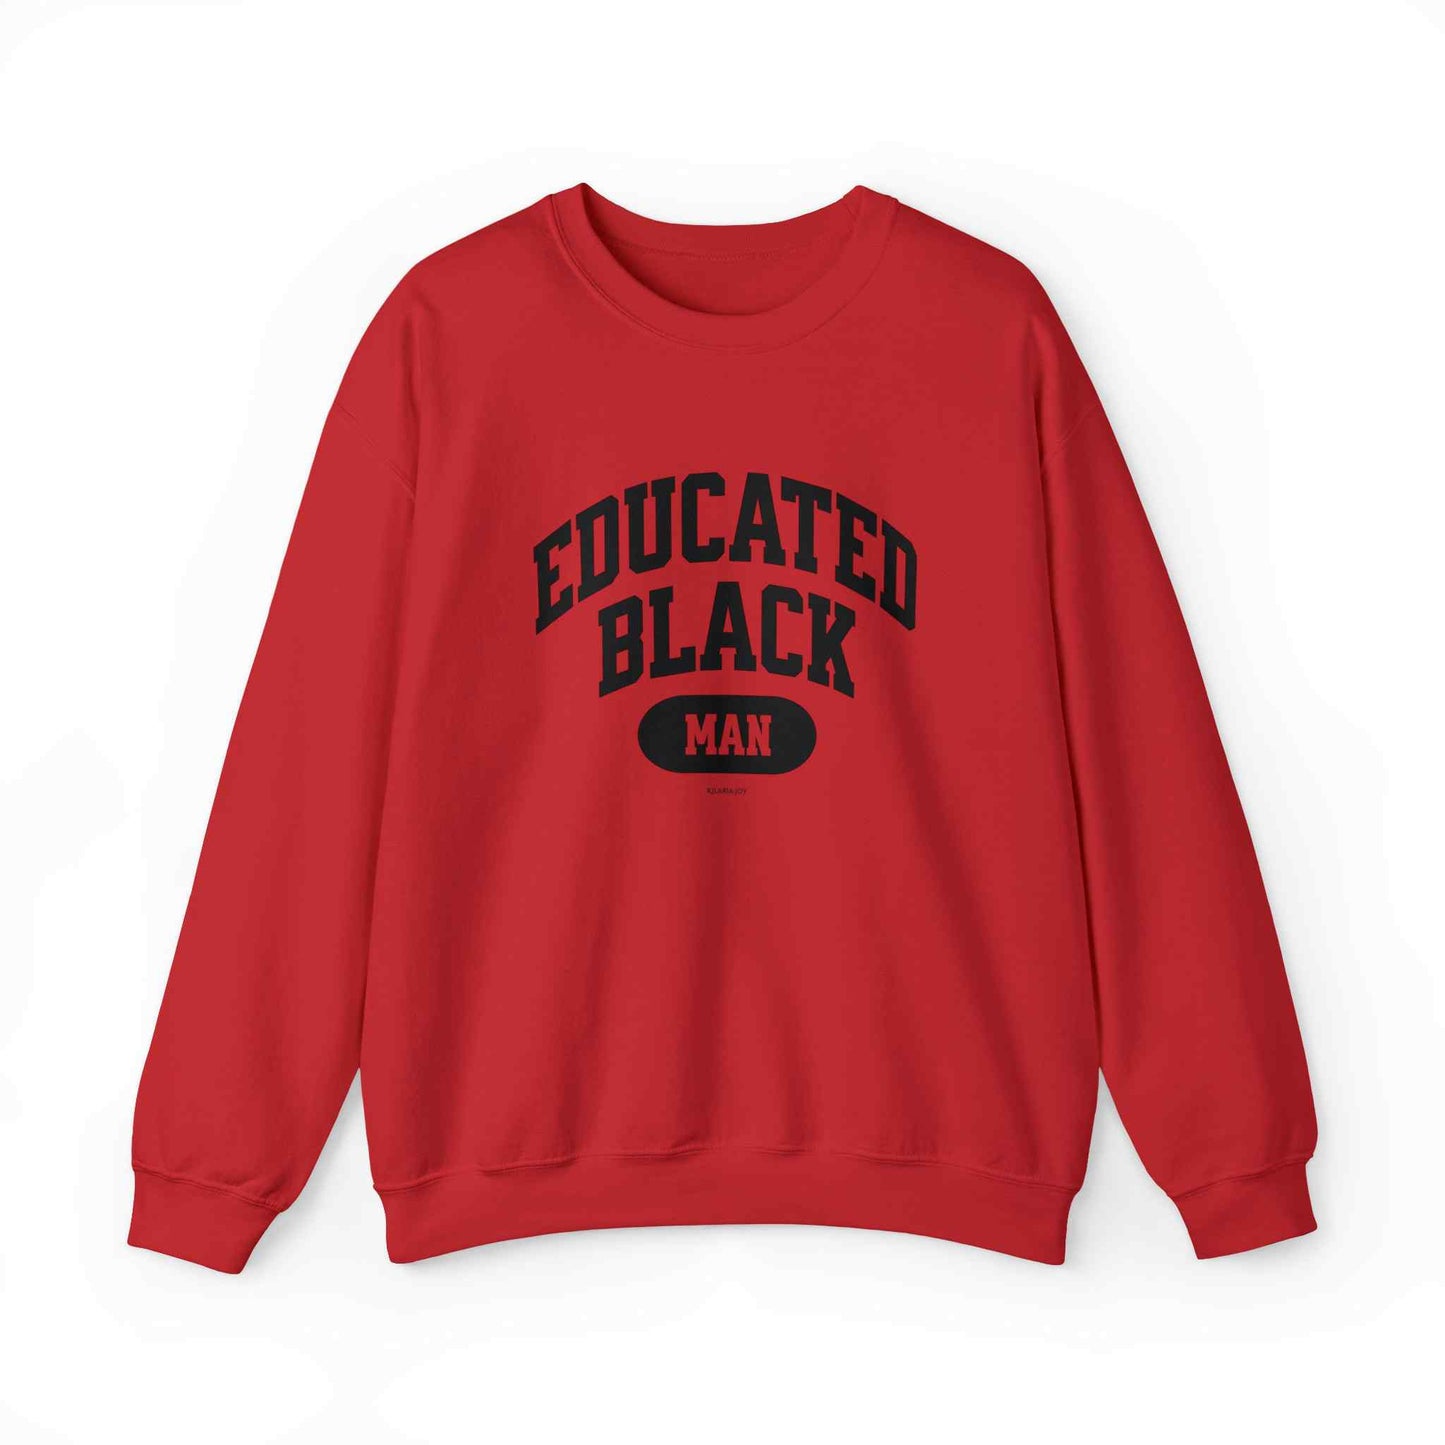 Educated Black Man Classic Fit Sweatshirt